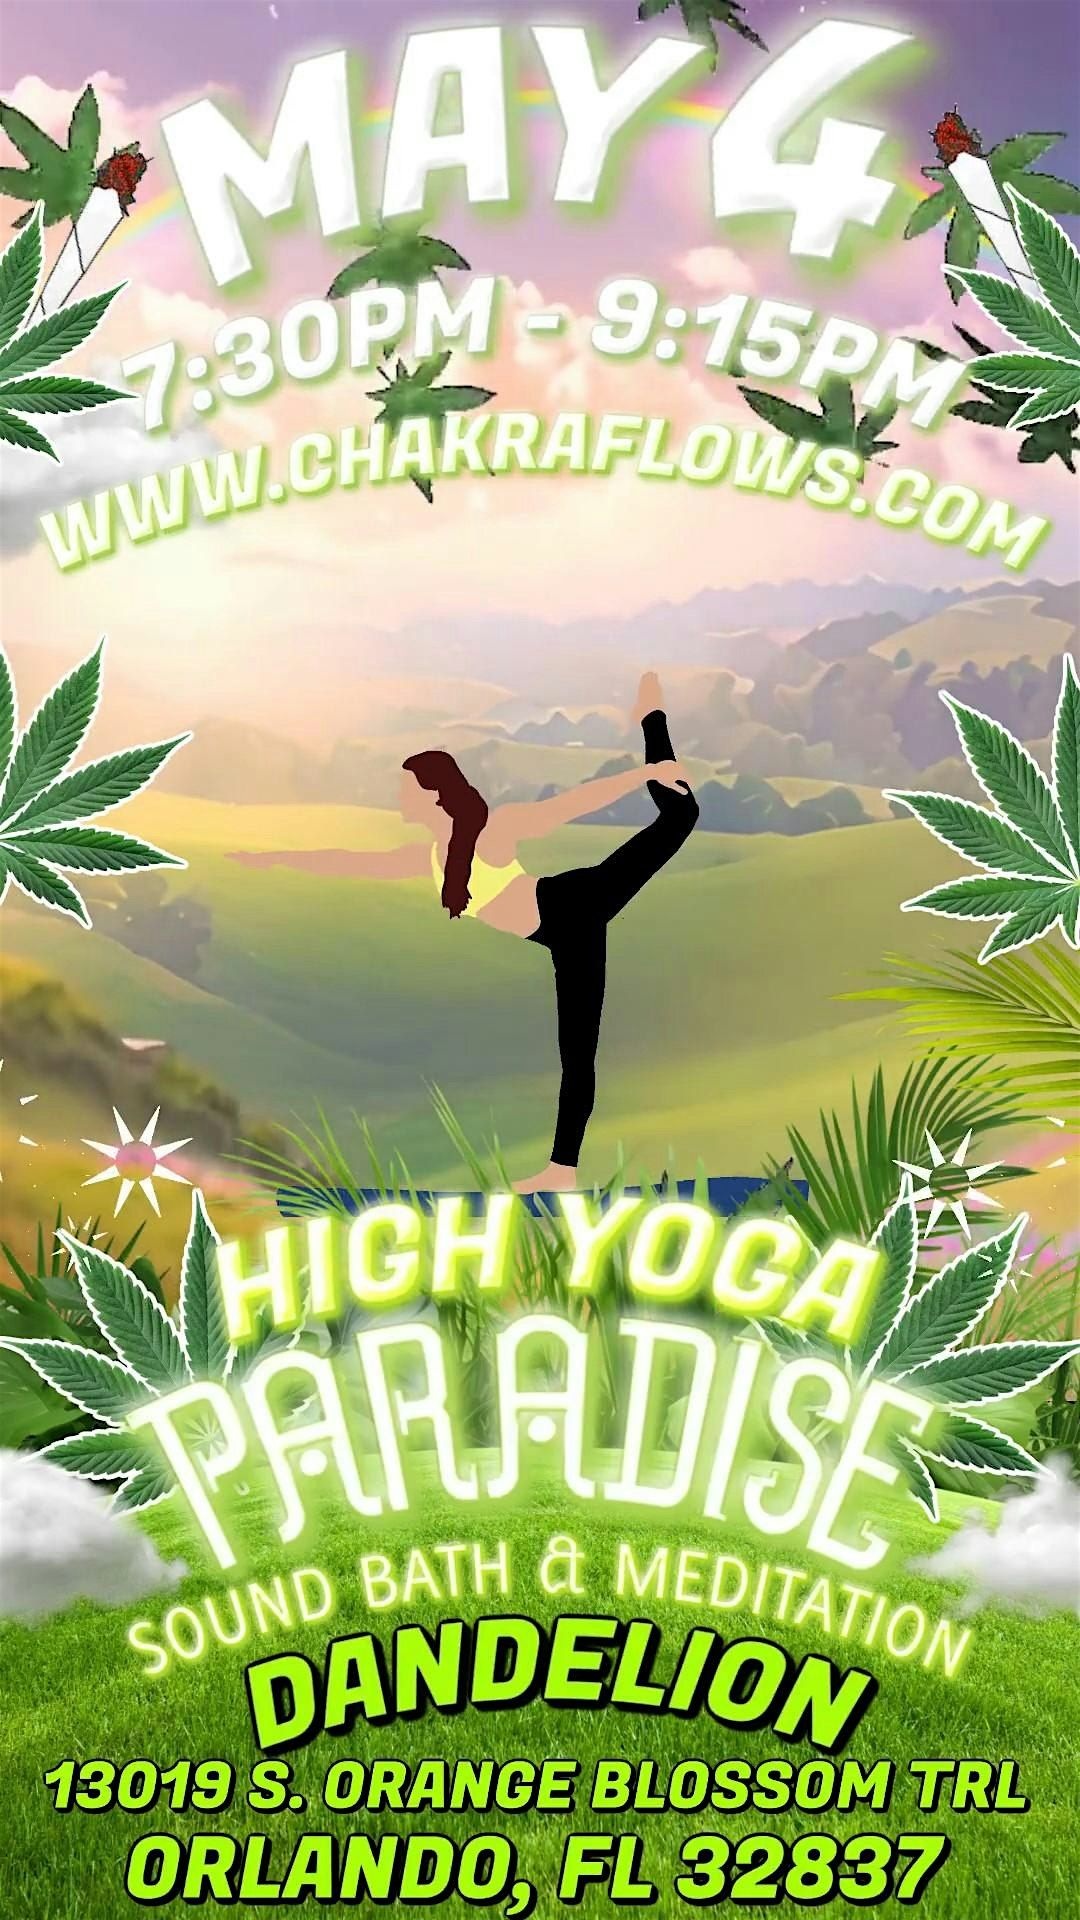 High Yoga Paradise Sound Bath & Meditation